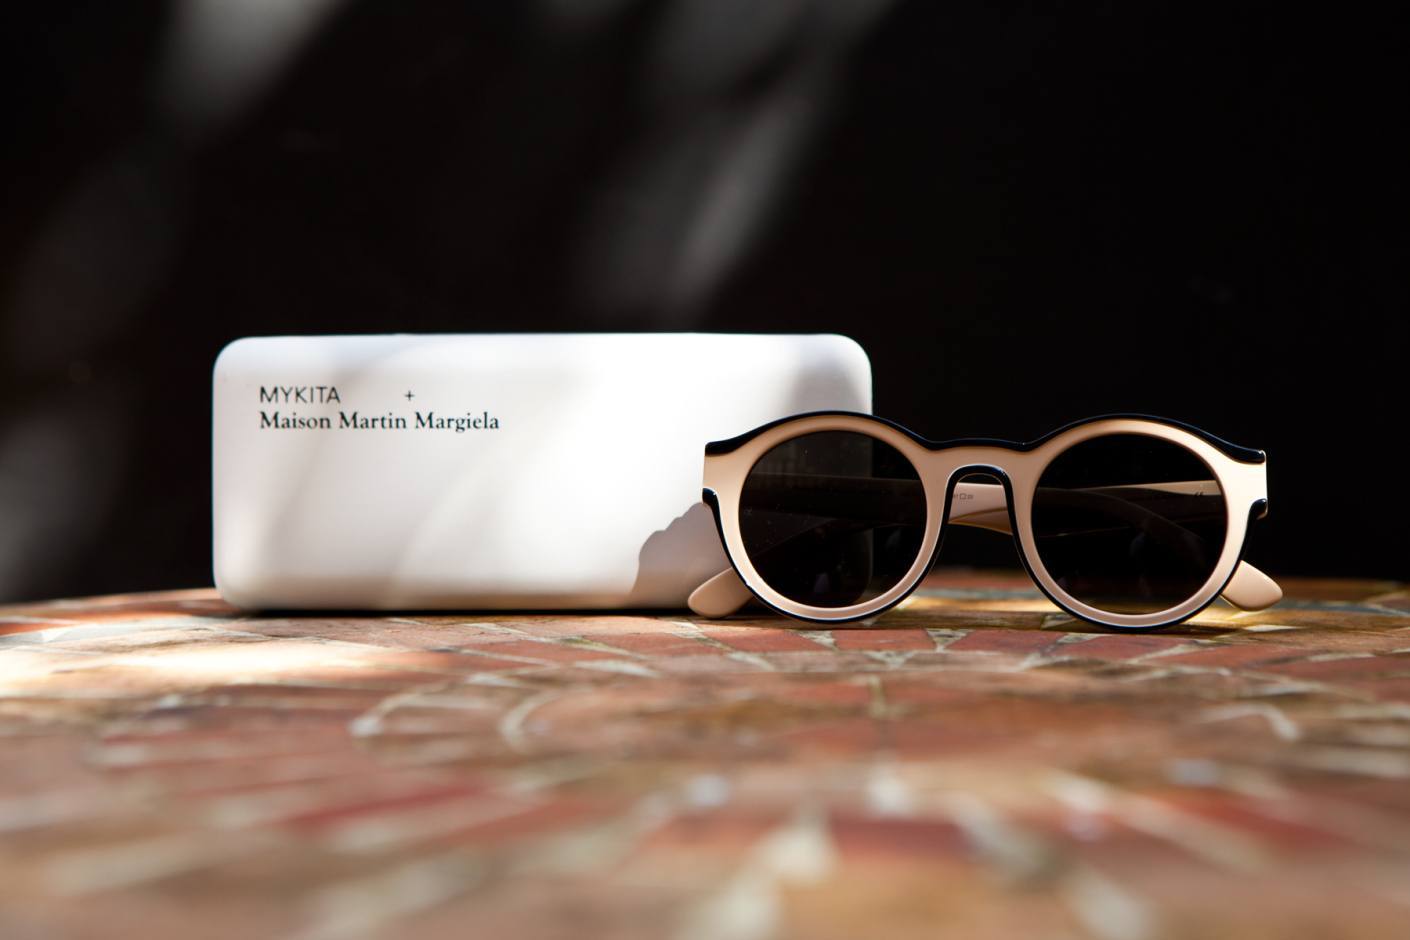 Солнцезащитные очки Maison Martin Margiela x MYKITA “Dual” сезона Лето 2014